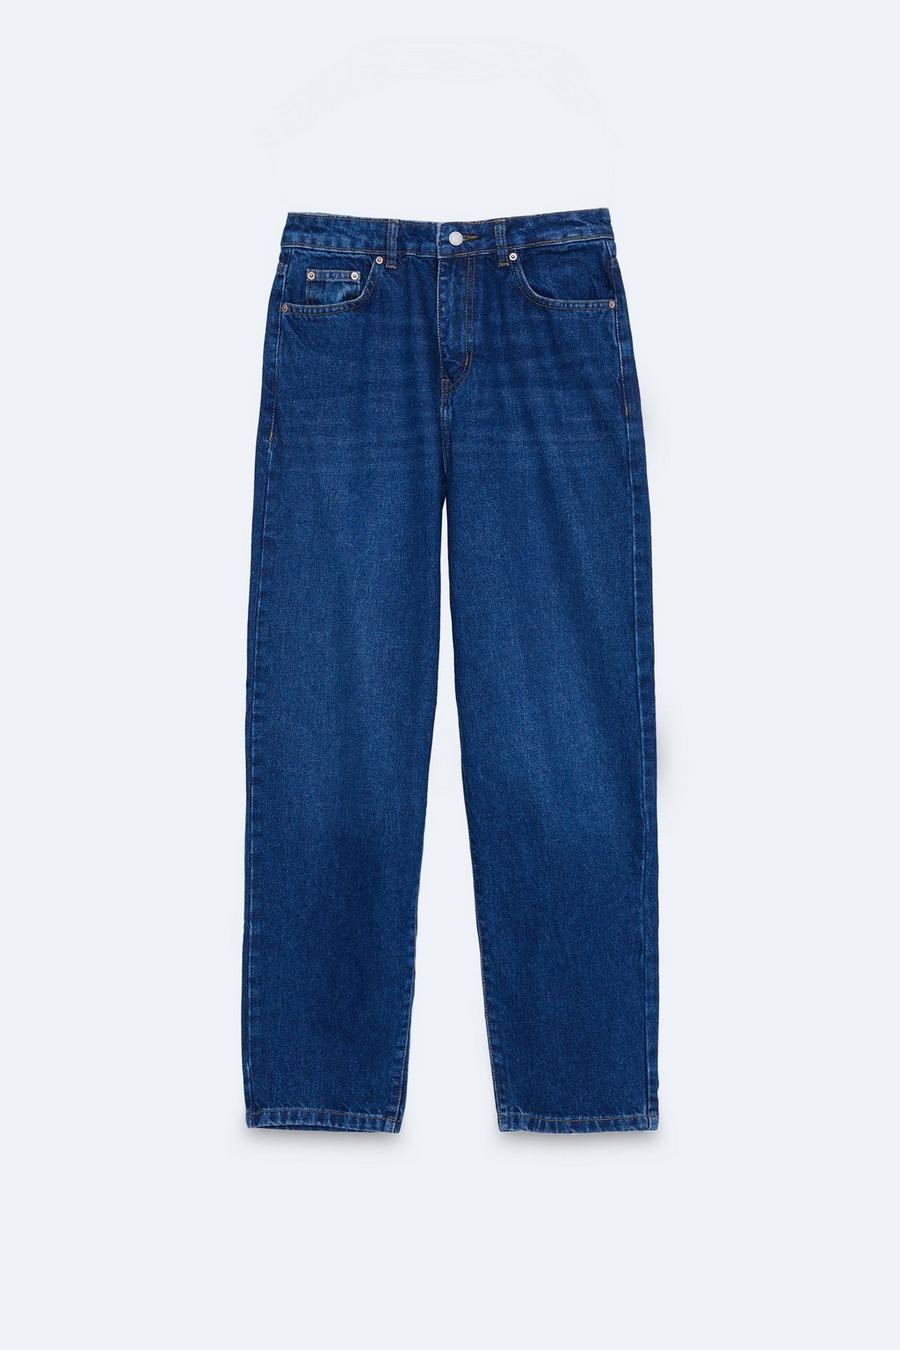 Vintage wash High Waist Denim Mom Jeans